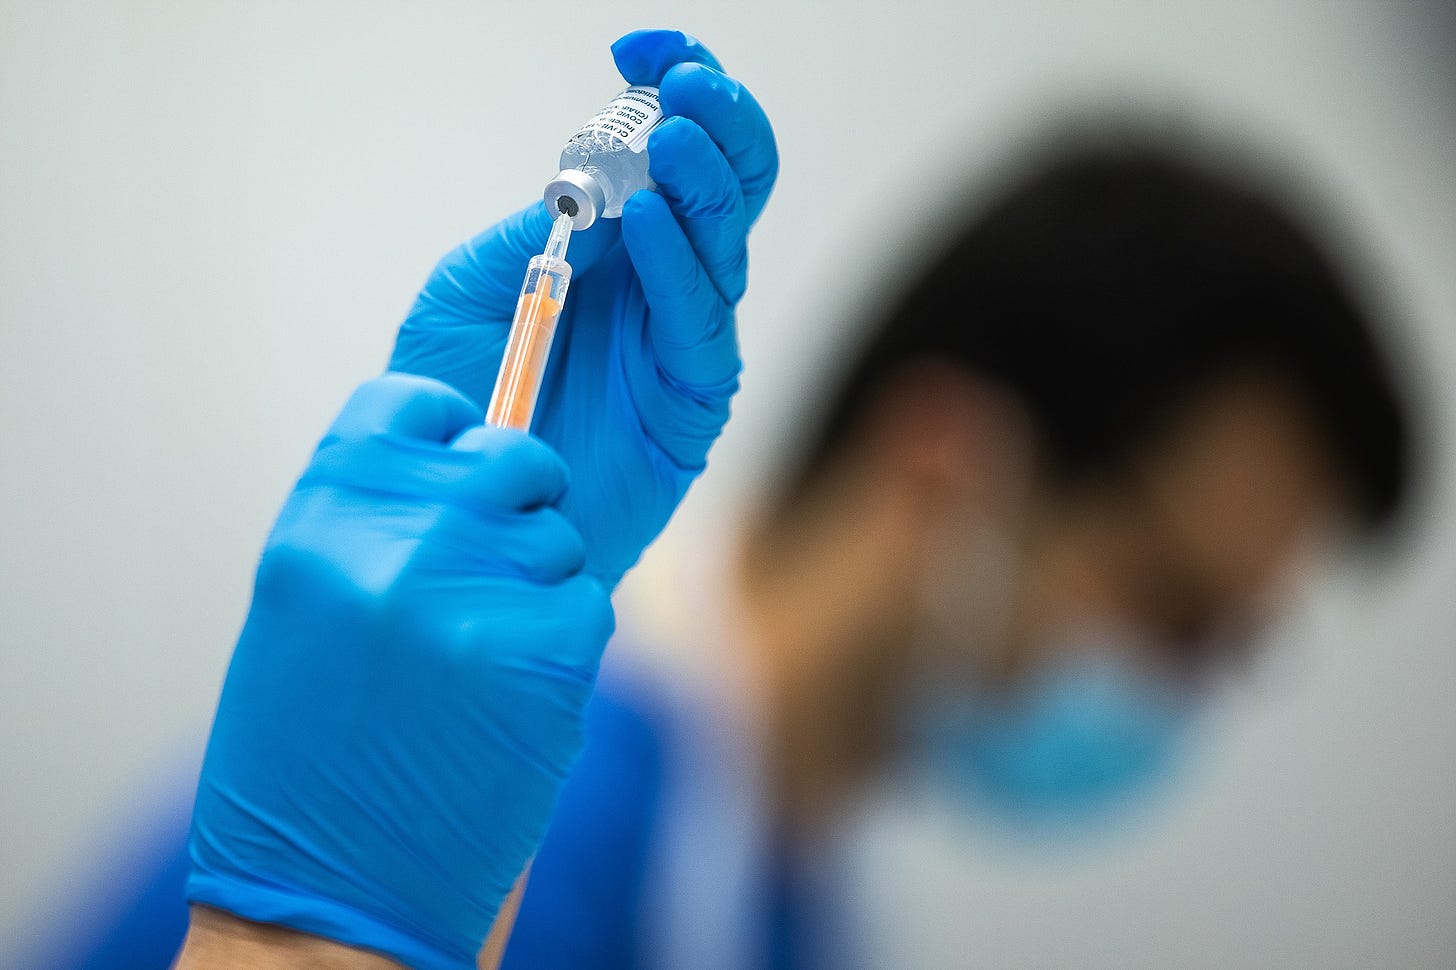 vaccine syringe being filled